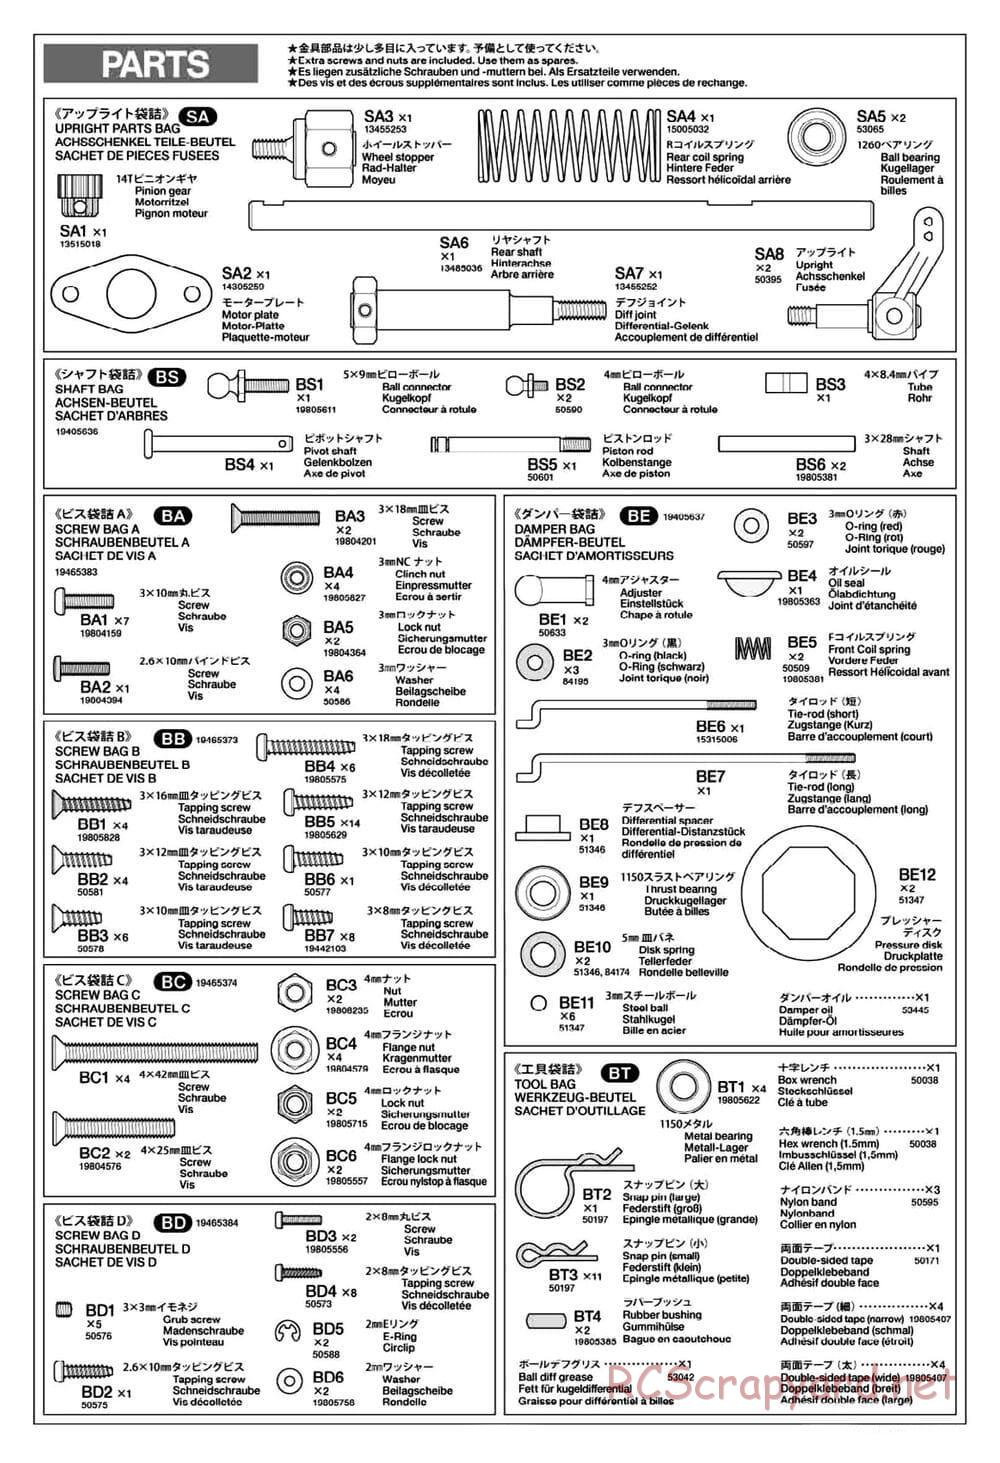 Tamiya - Group-C Chassis - Manual - Page 16